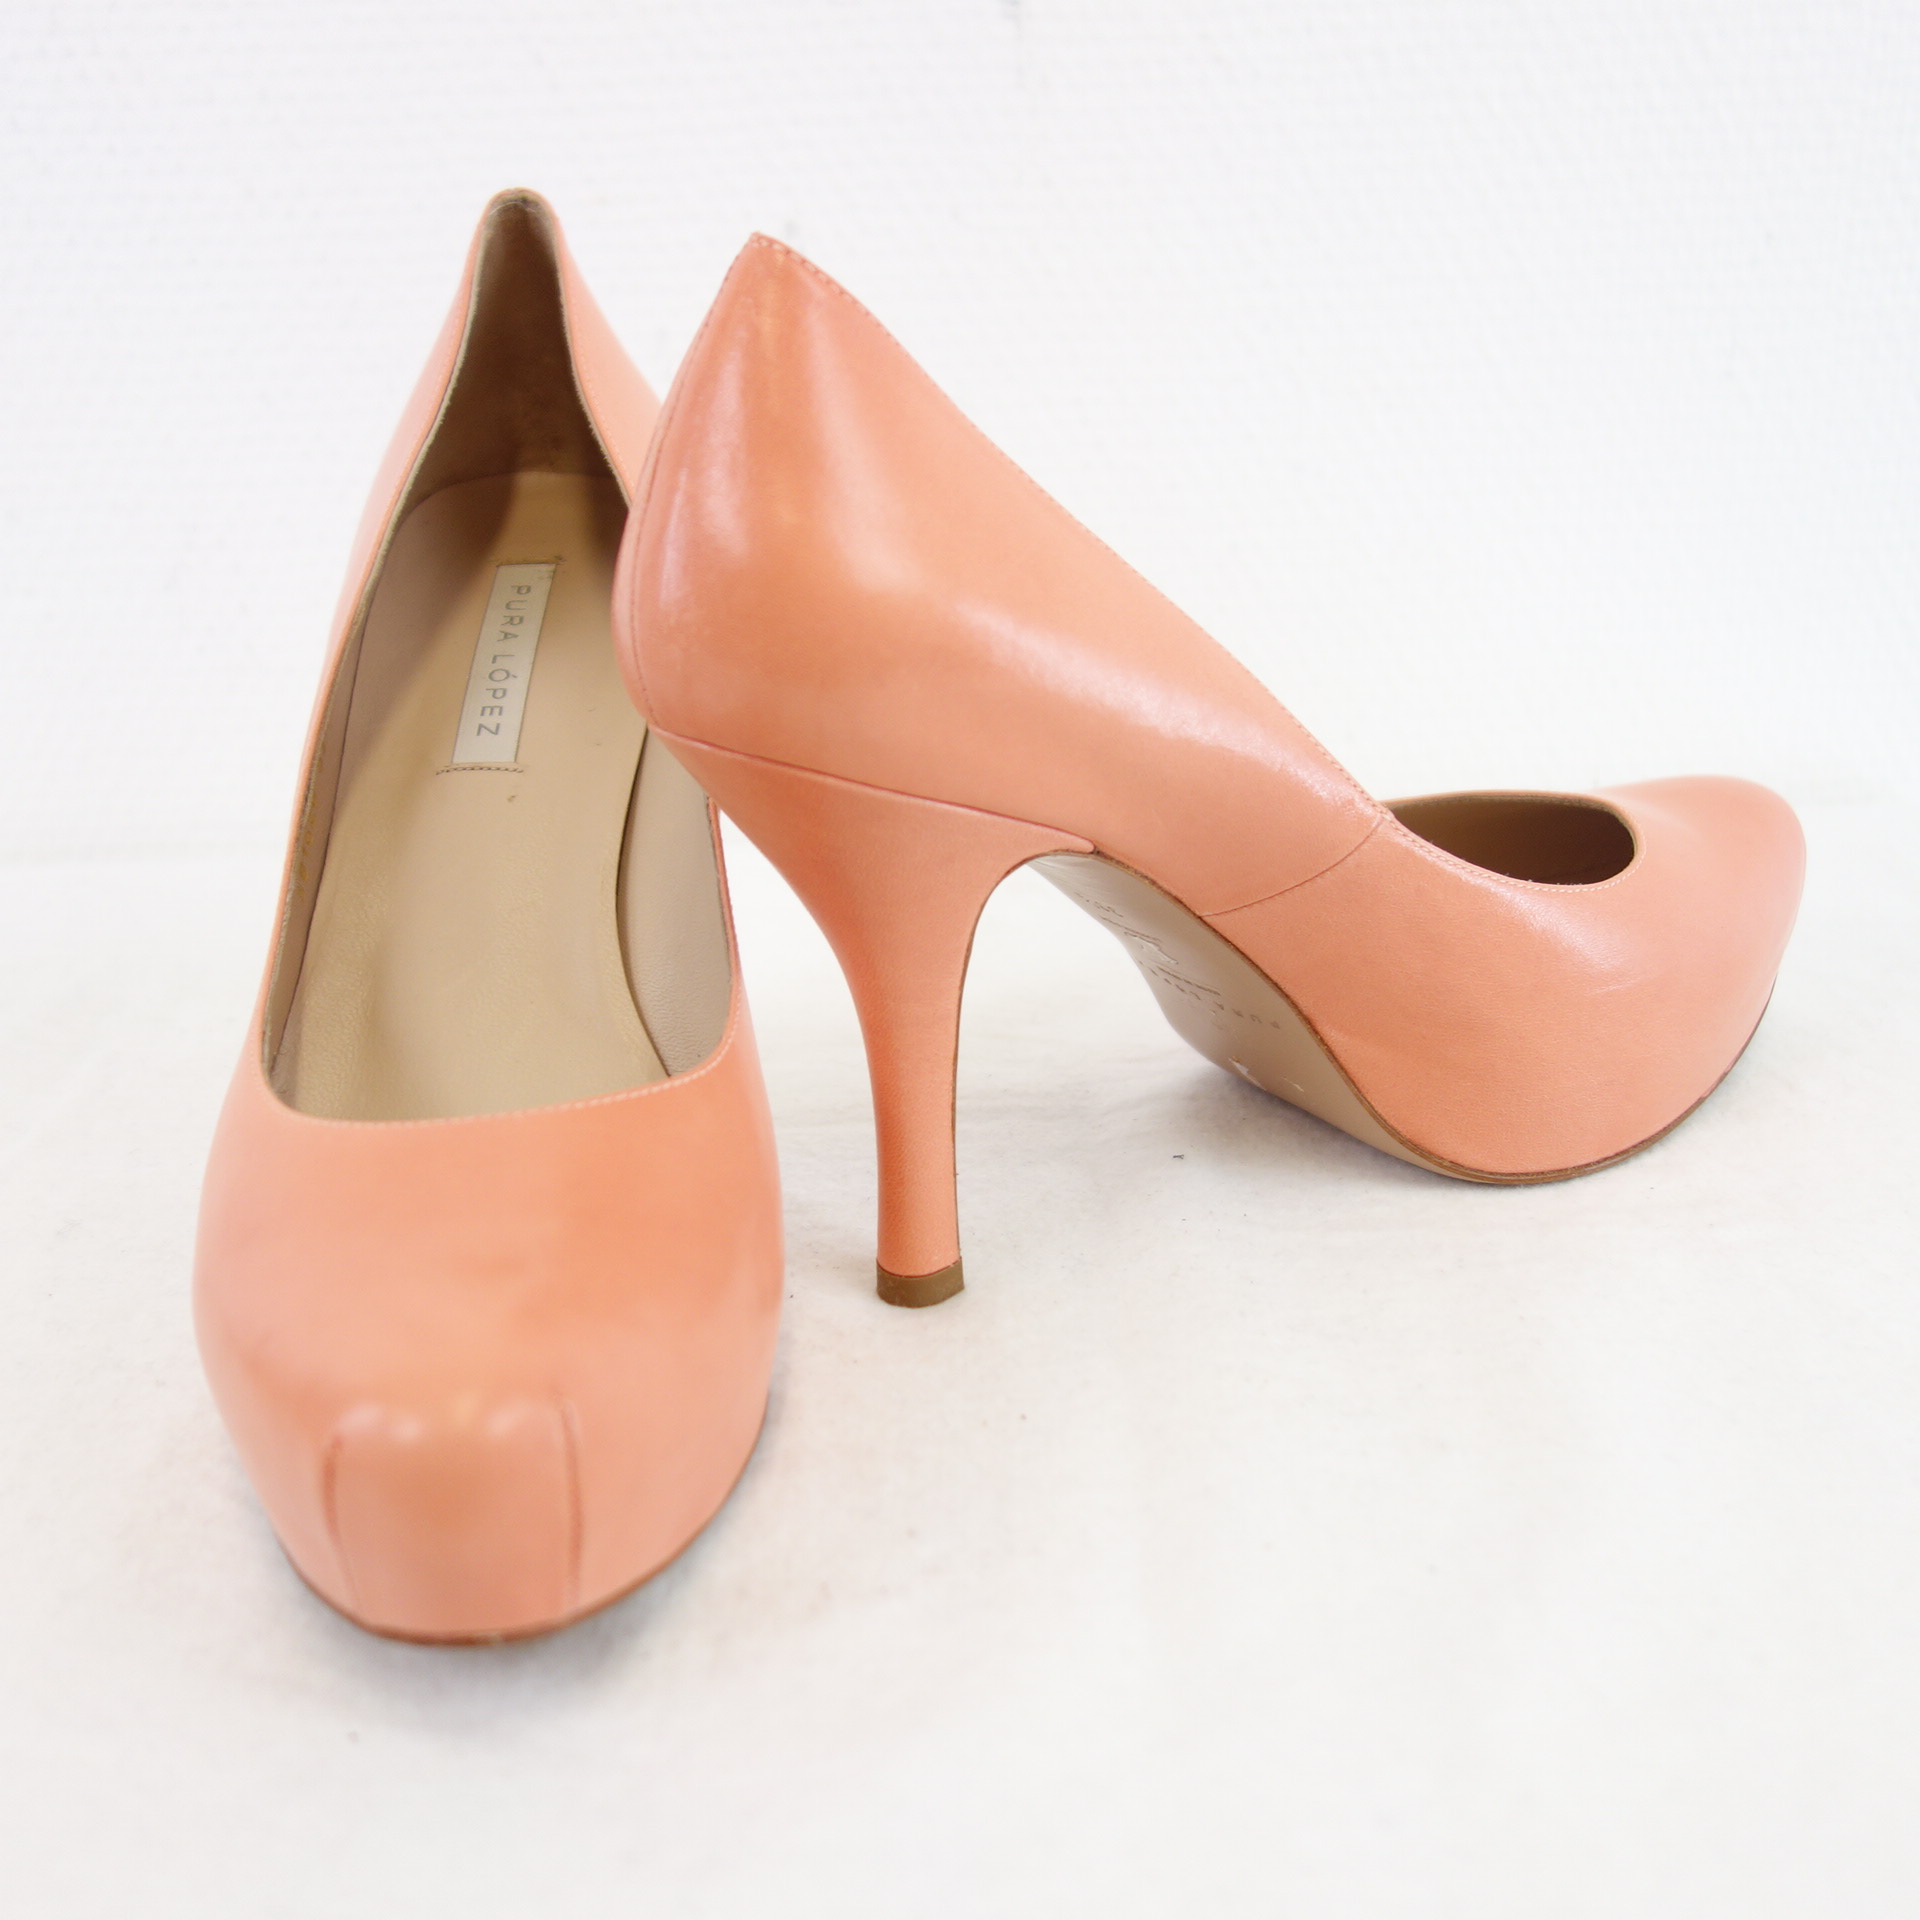 PURA LOPEZ Damen Schuhe Pumps High Heels Stiletto Leder Magnolia Rosa 39,5